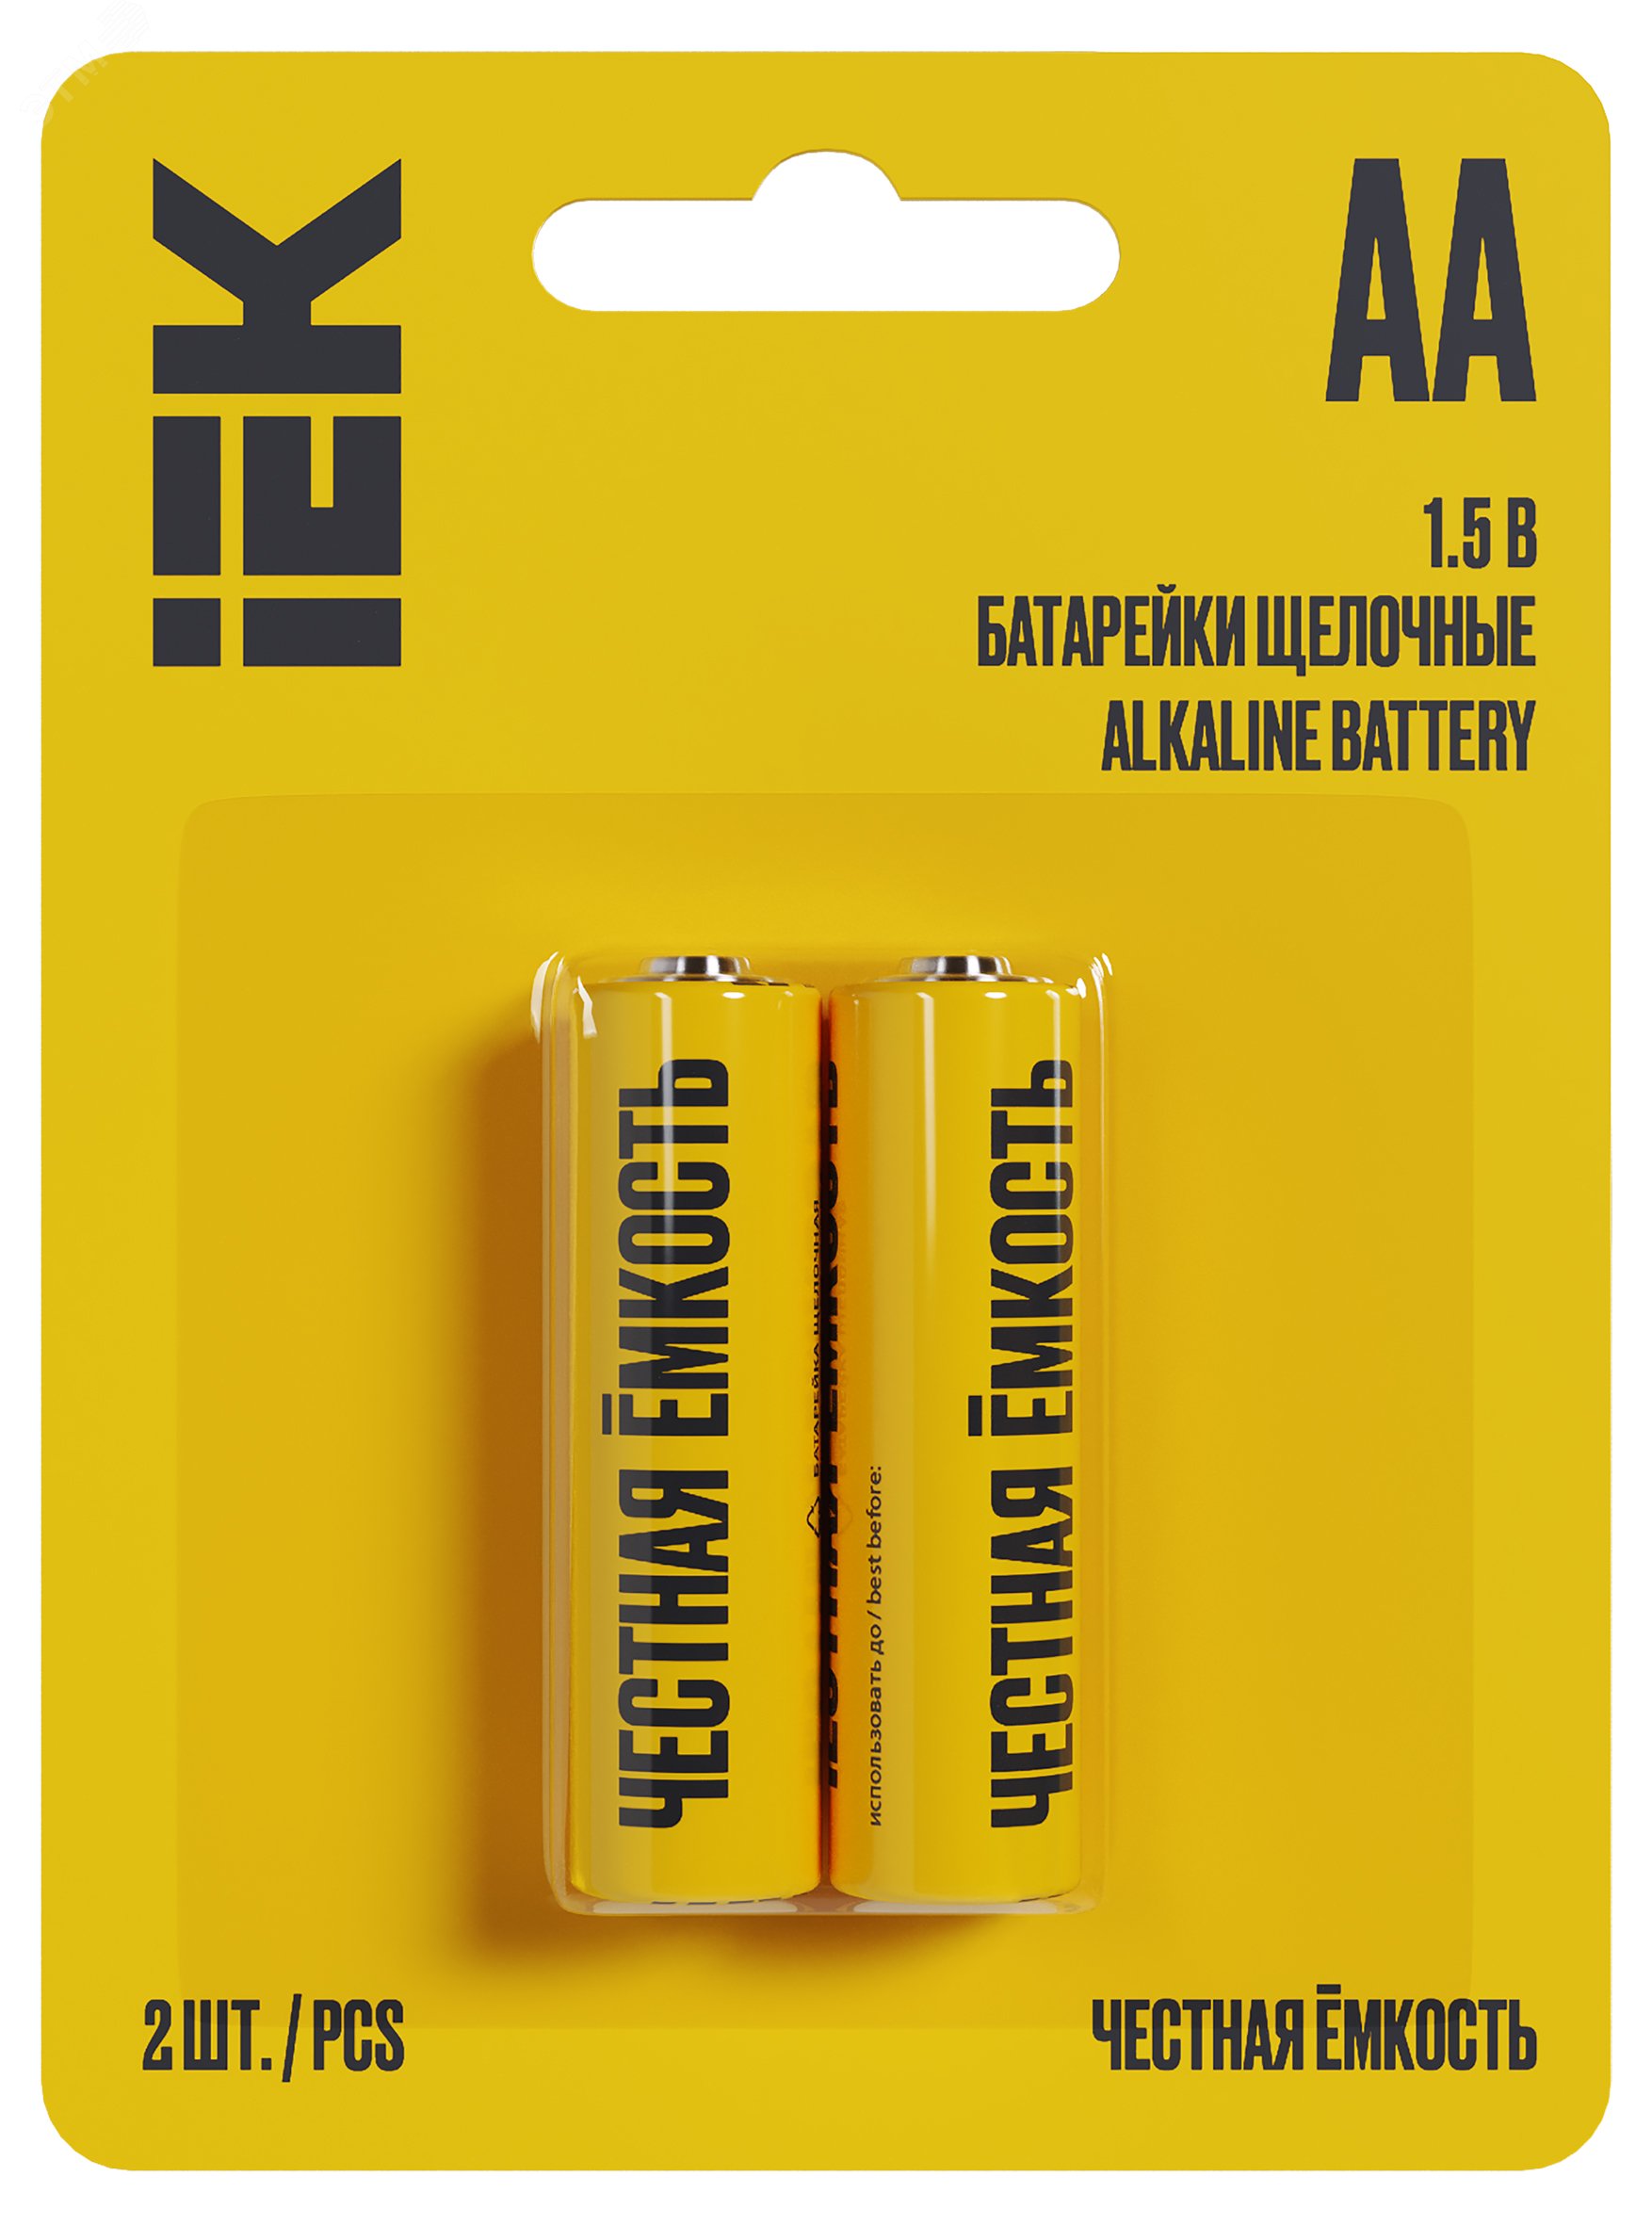 Батарейка щелочная Alkaline LR06/AA (2шт/бли стер) ABT-LR06-OP-L02 IEK - превью 2